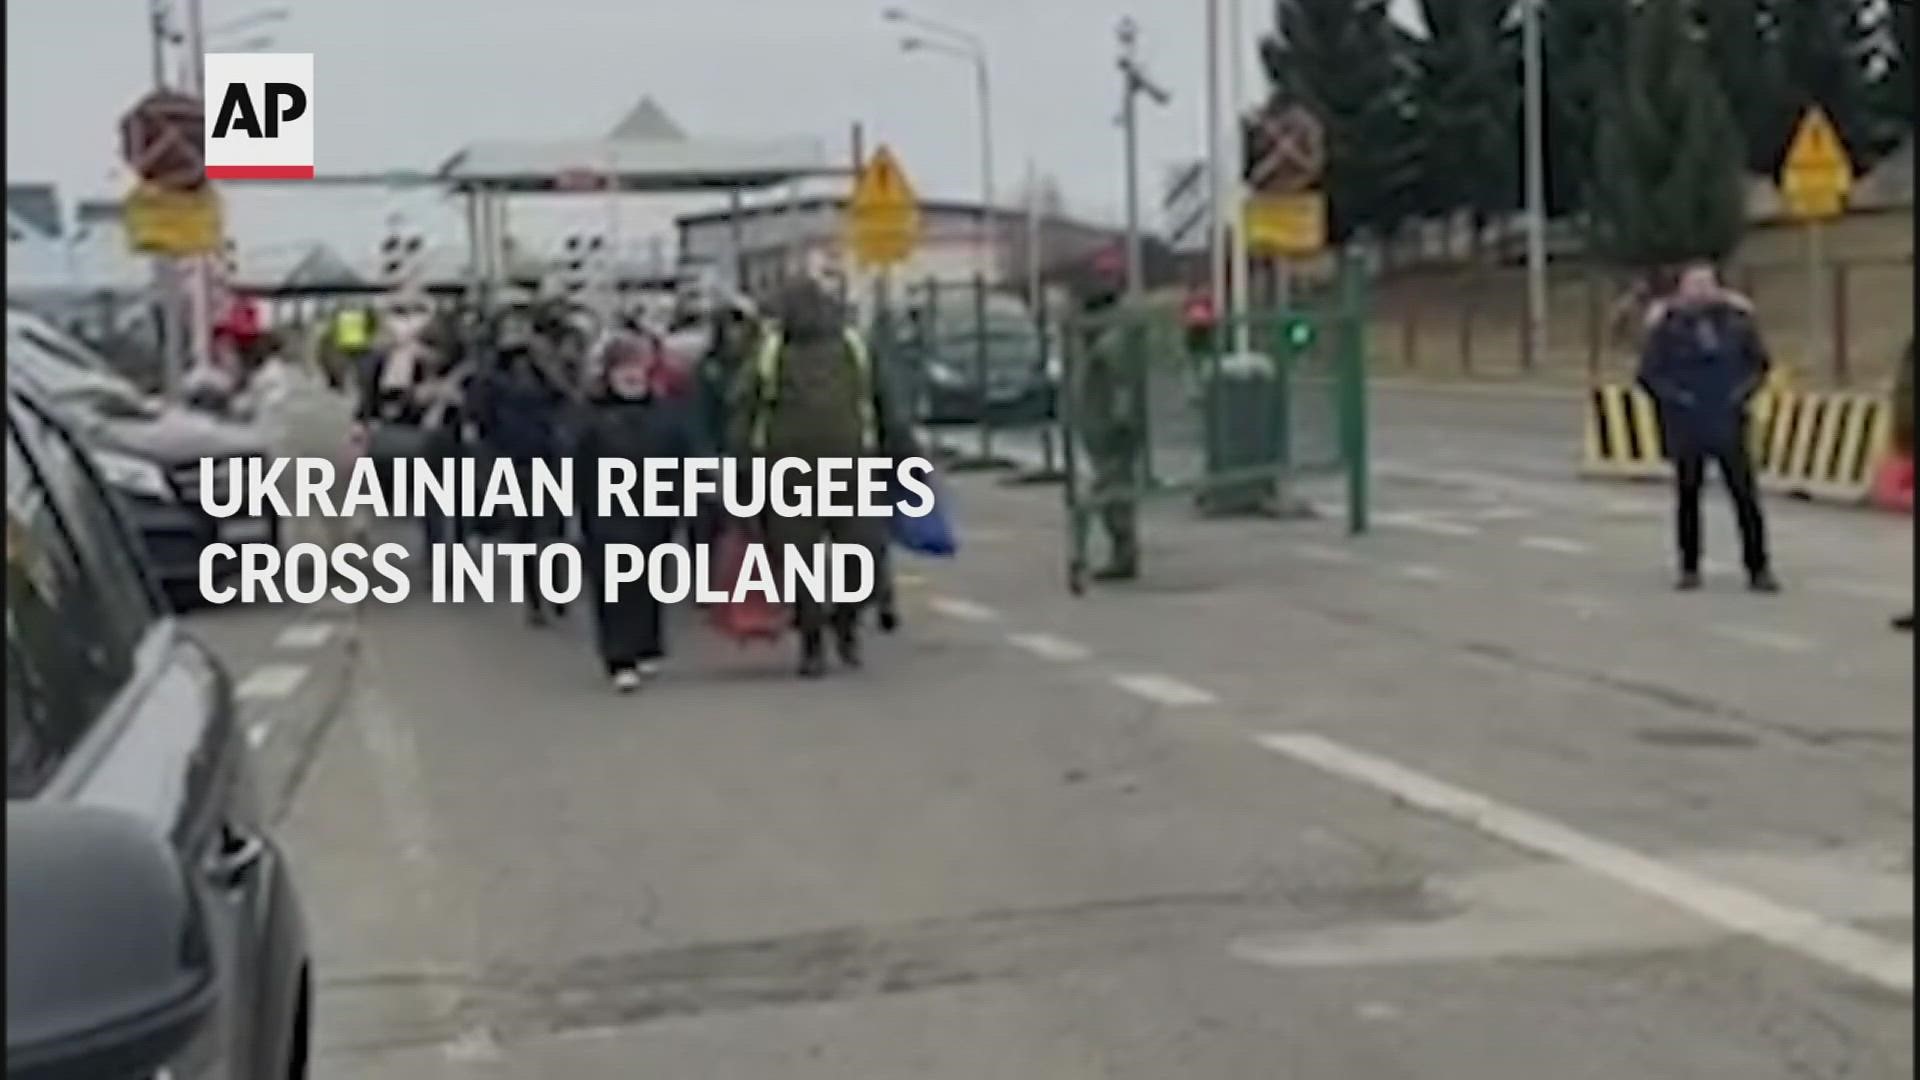 Ukrainian refugees continued to cross into Poland at the Korczowa border post on Saturday, where U.S. Secretary of State Antony Blinken visited.